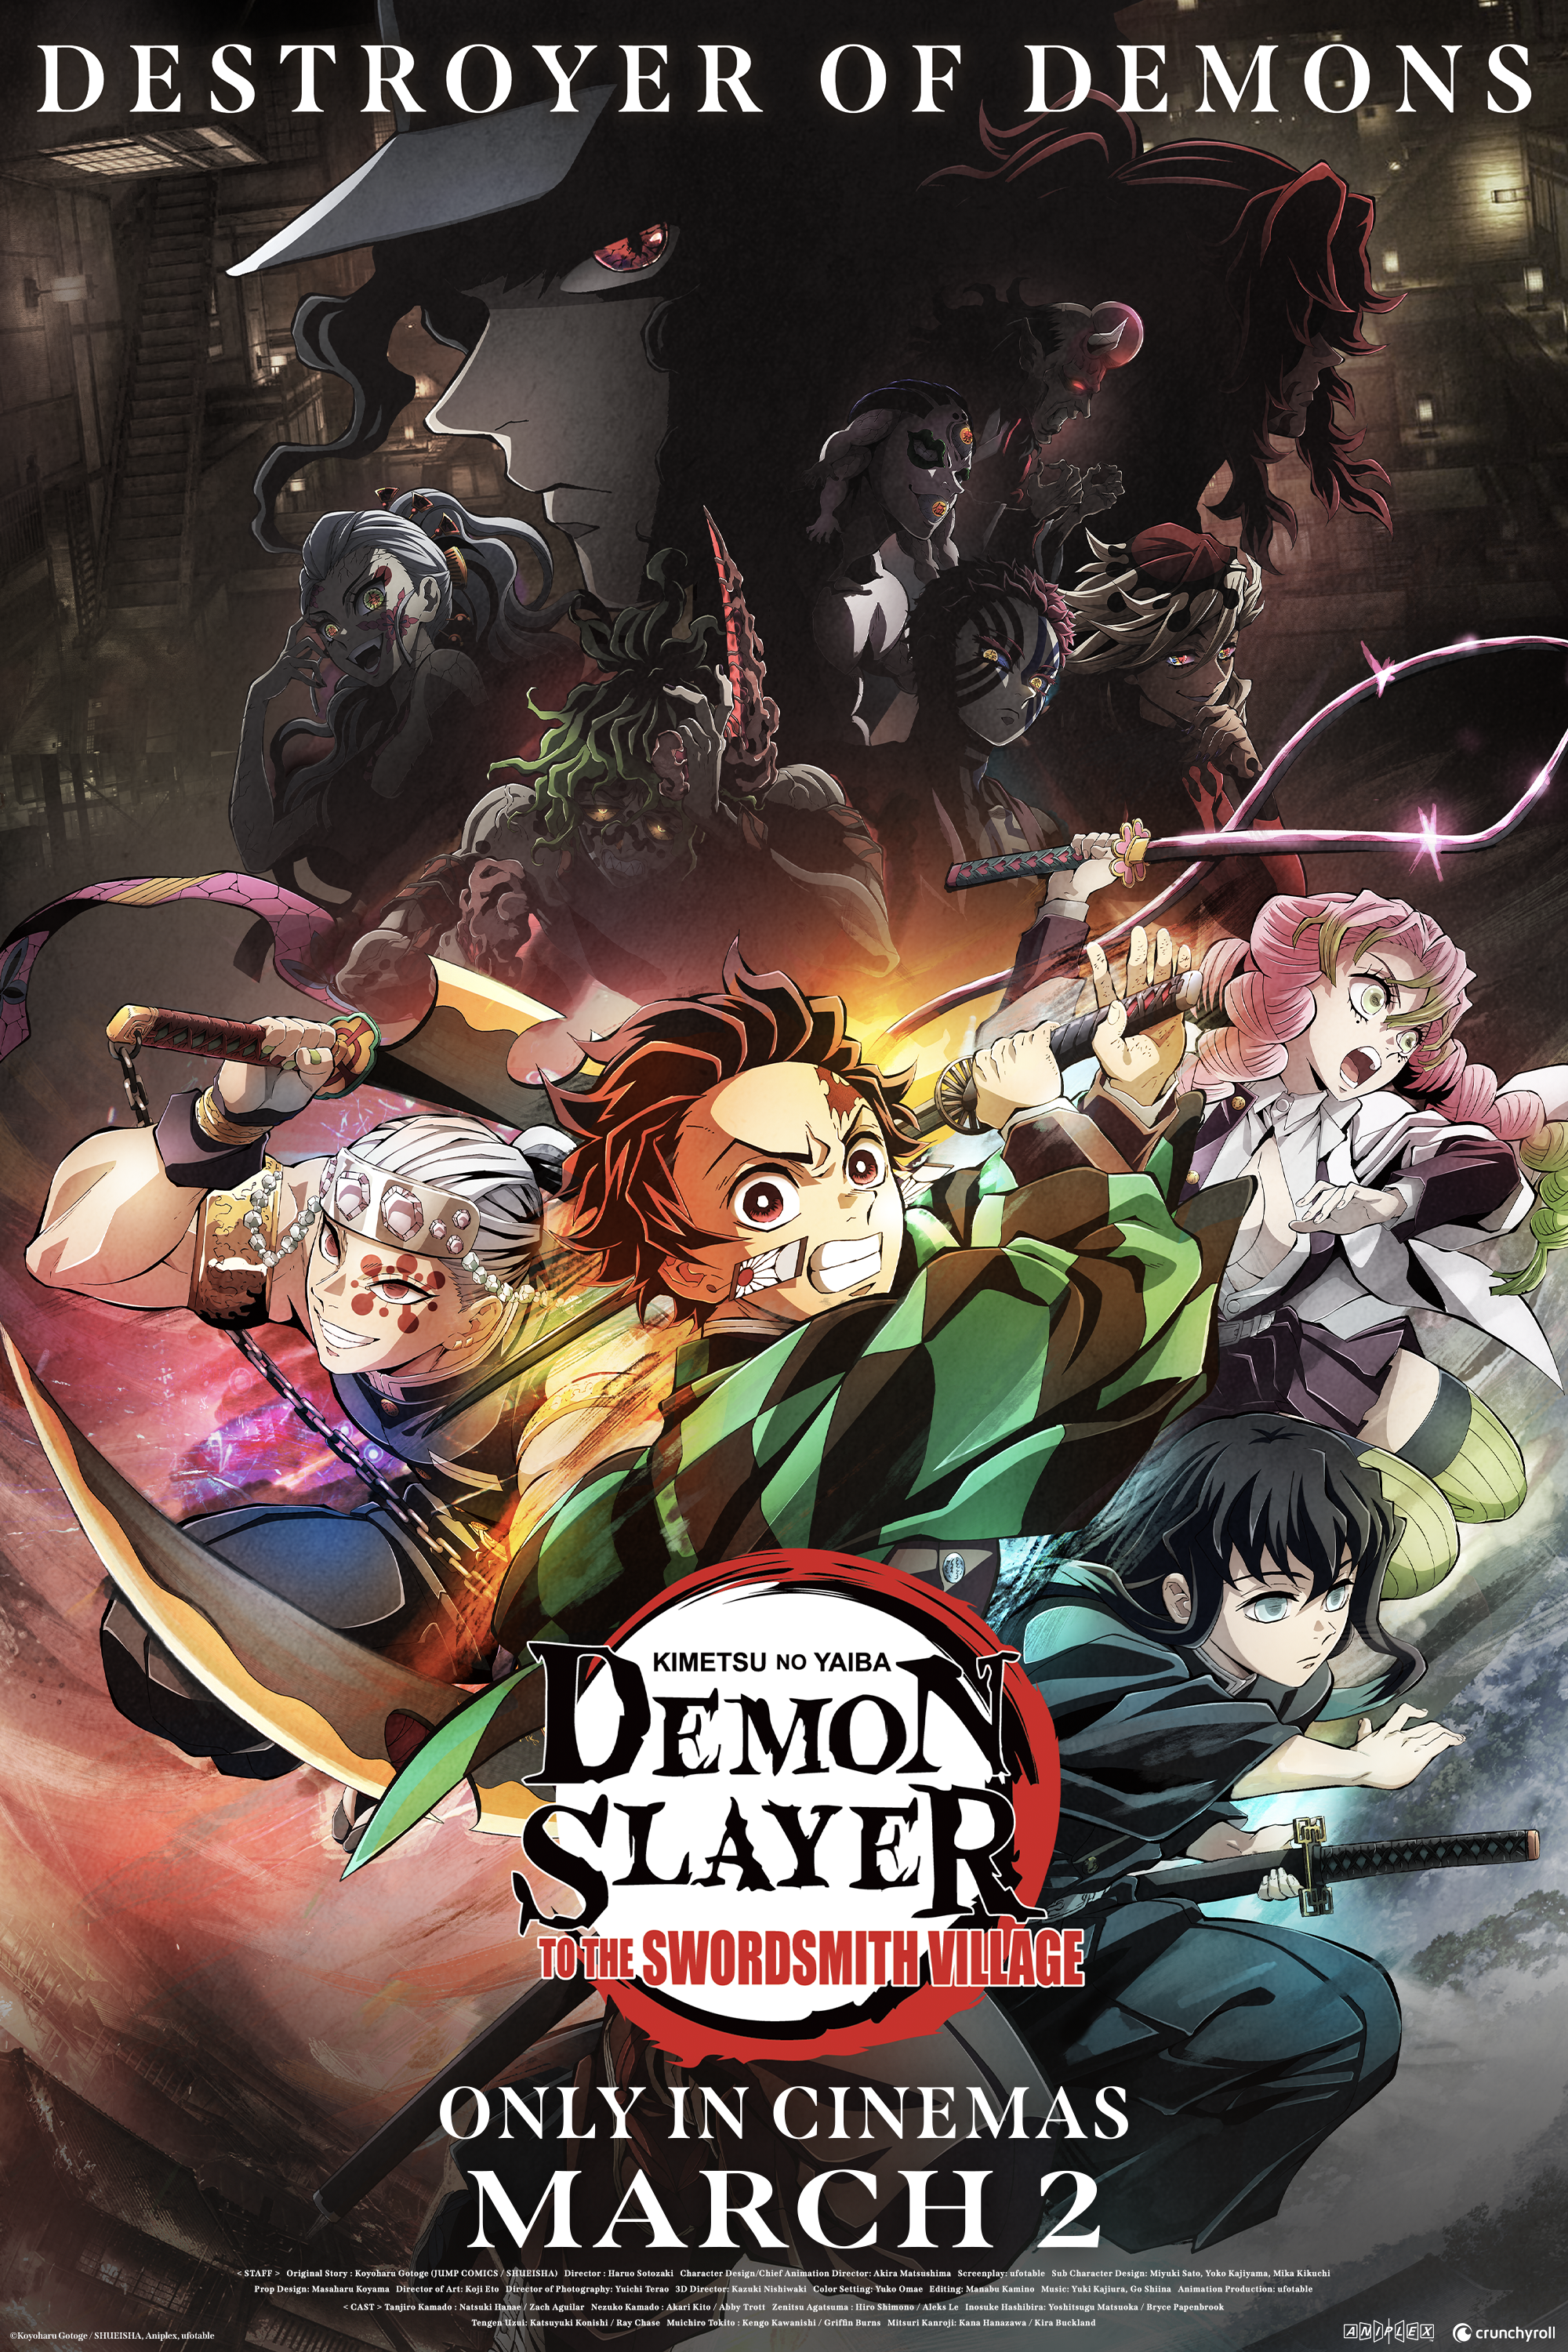 Demon Slayer Swordsmith Village Arc - Episode 1 - I drink and watch anime